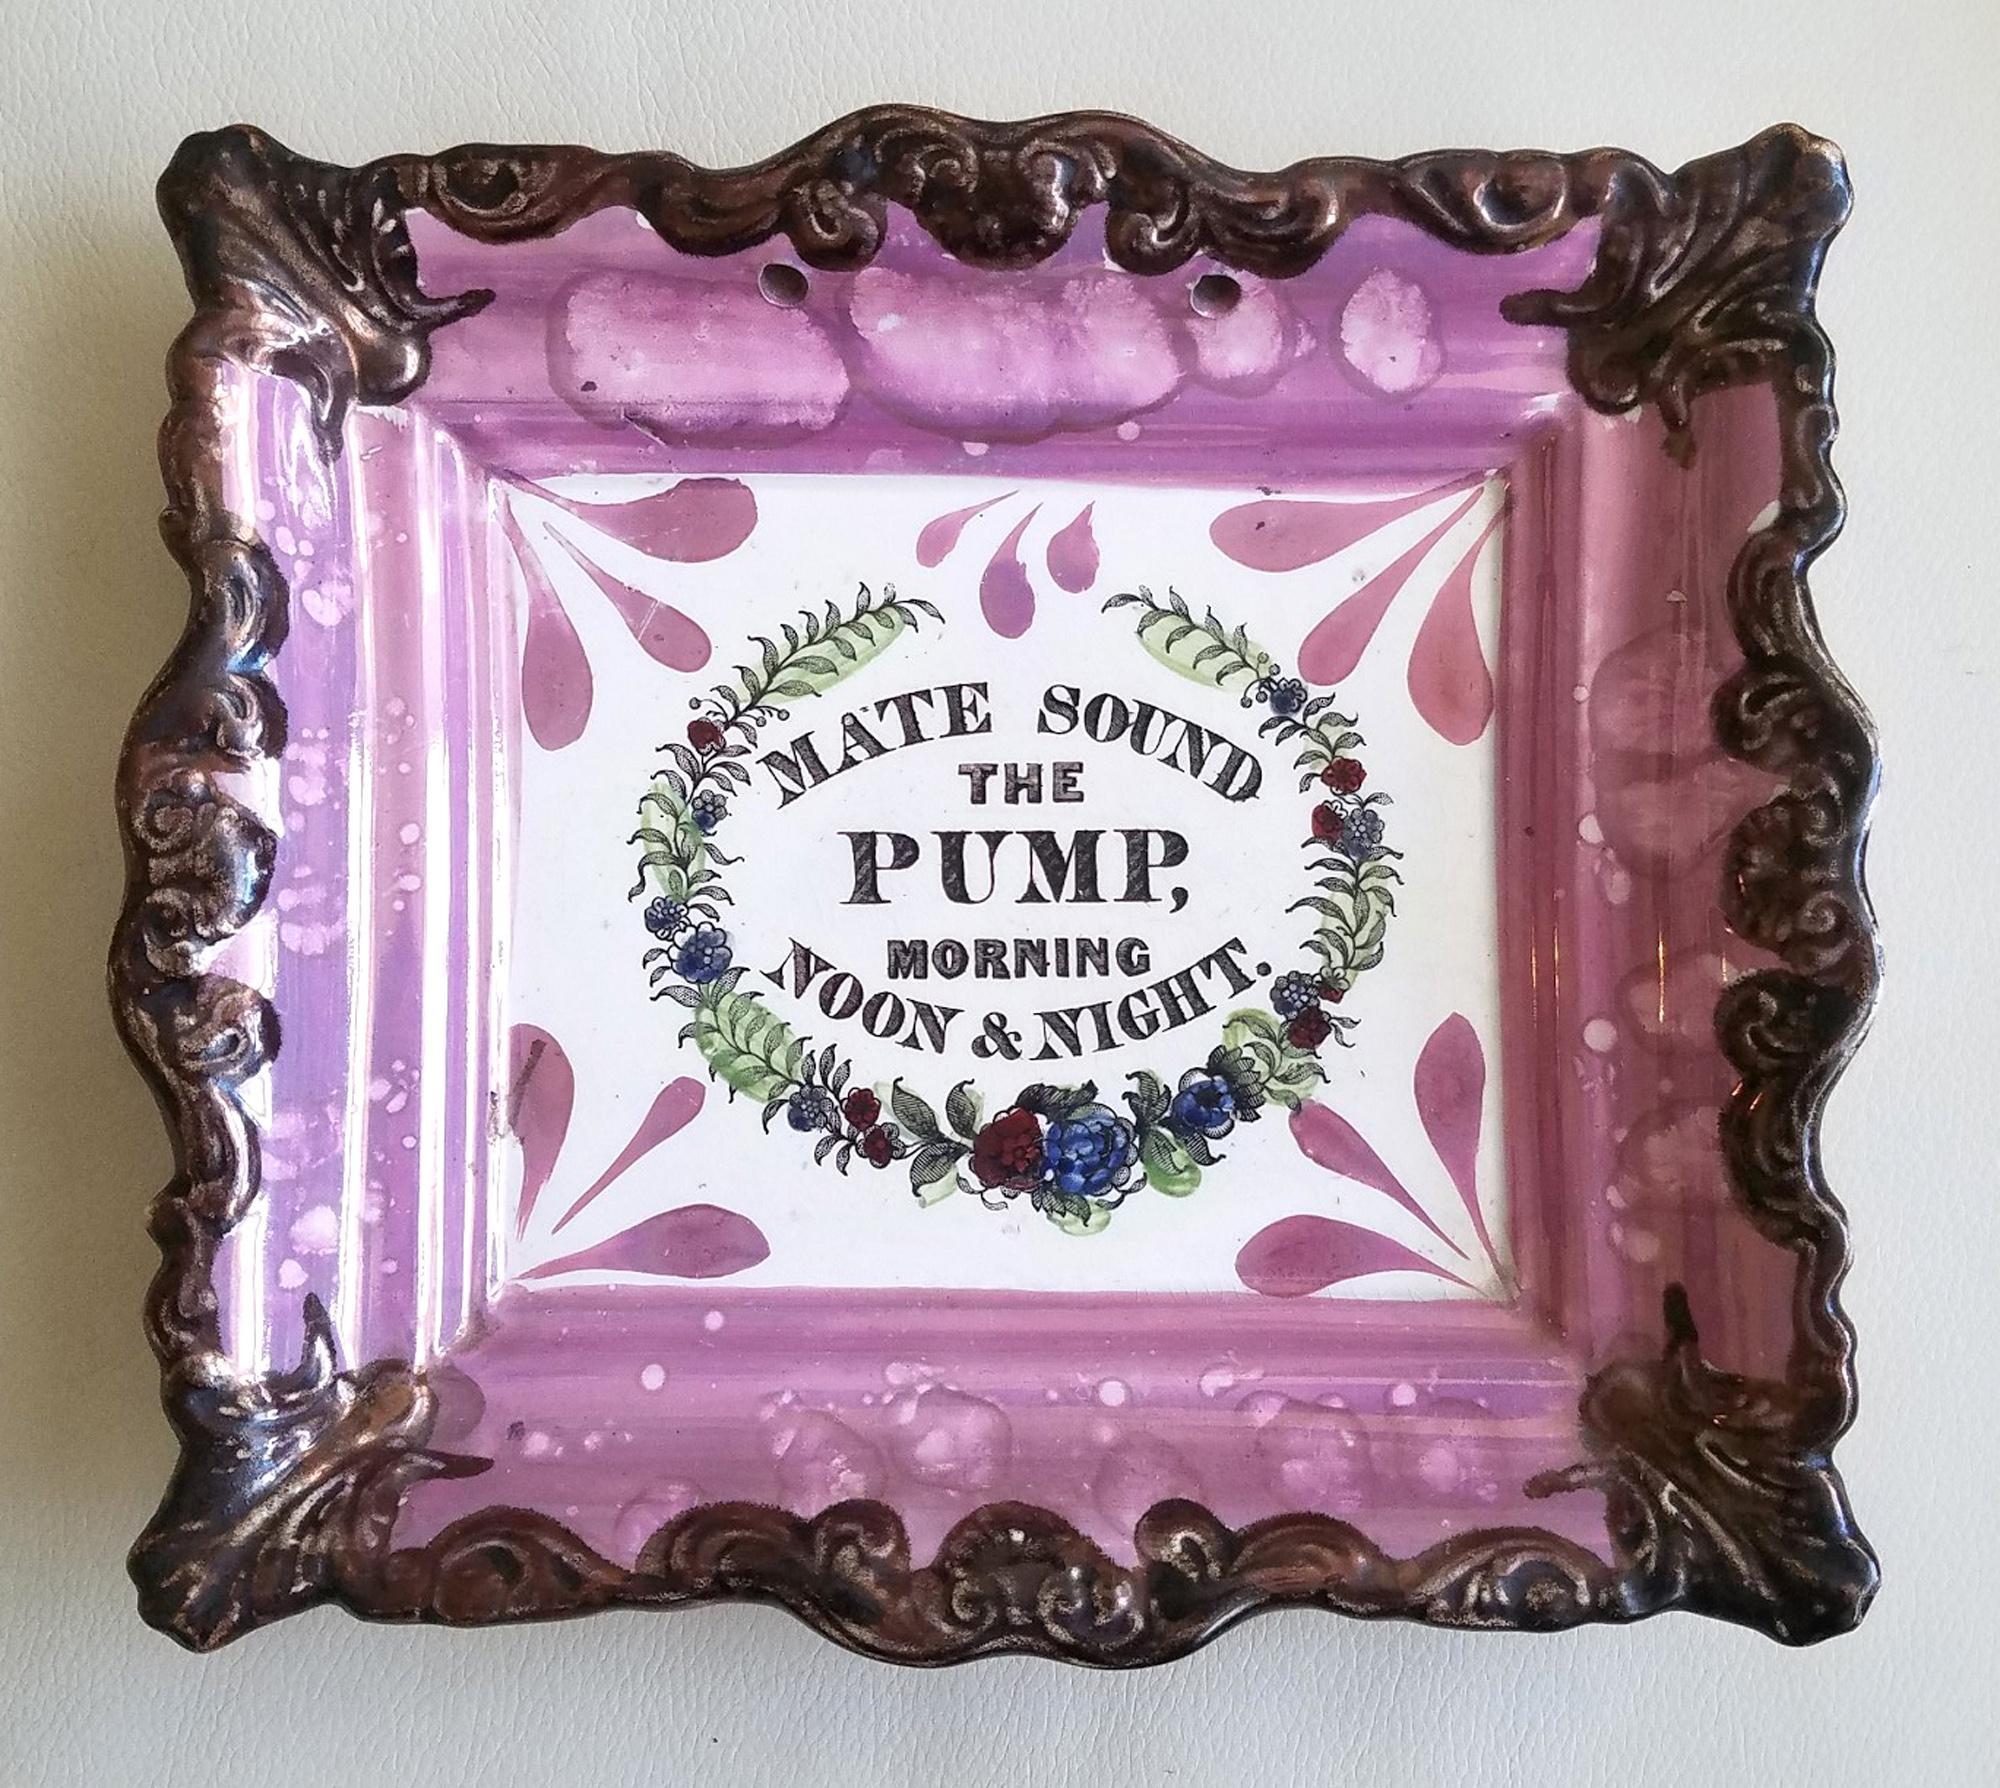 Regency Sunderland Pink Lustre Plaque, Mate Sound the Pump, Morning Noon and Night